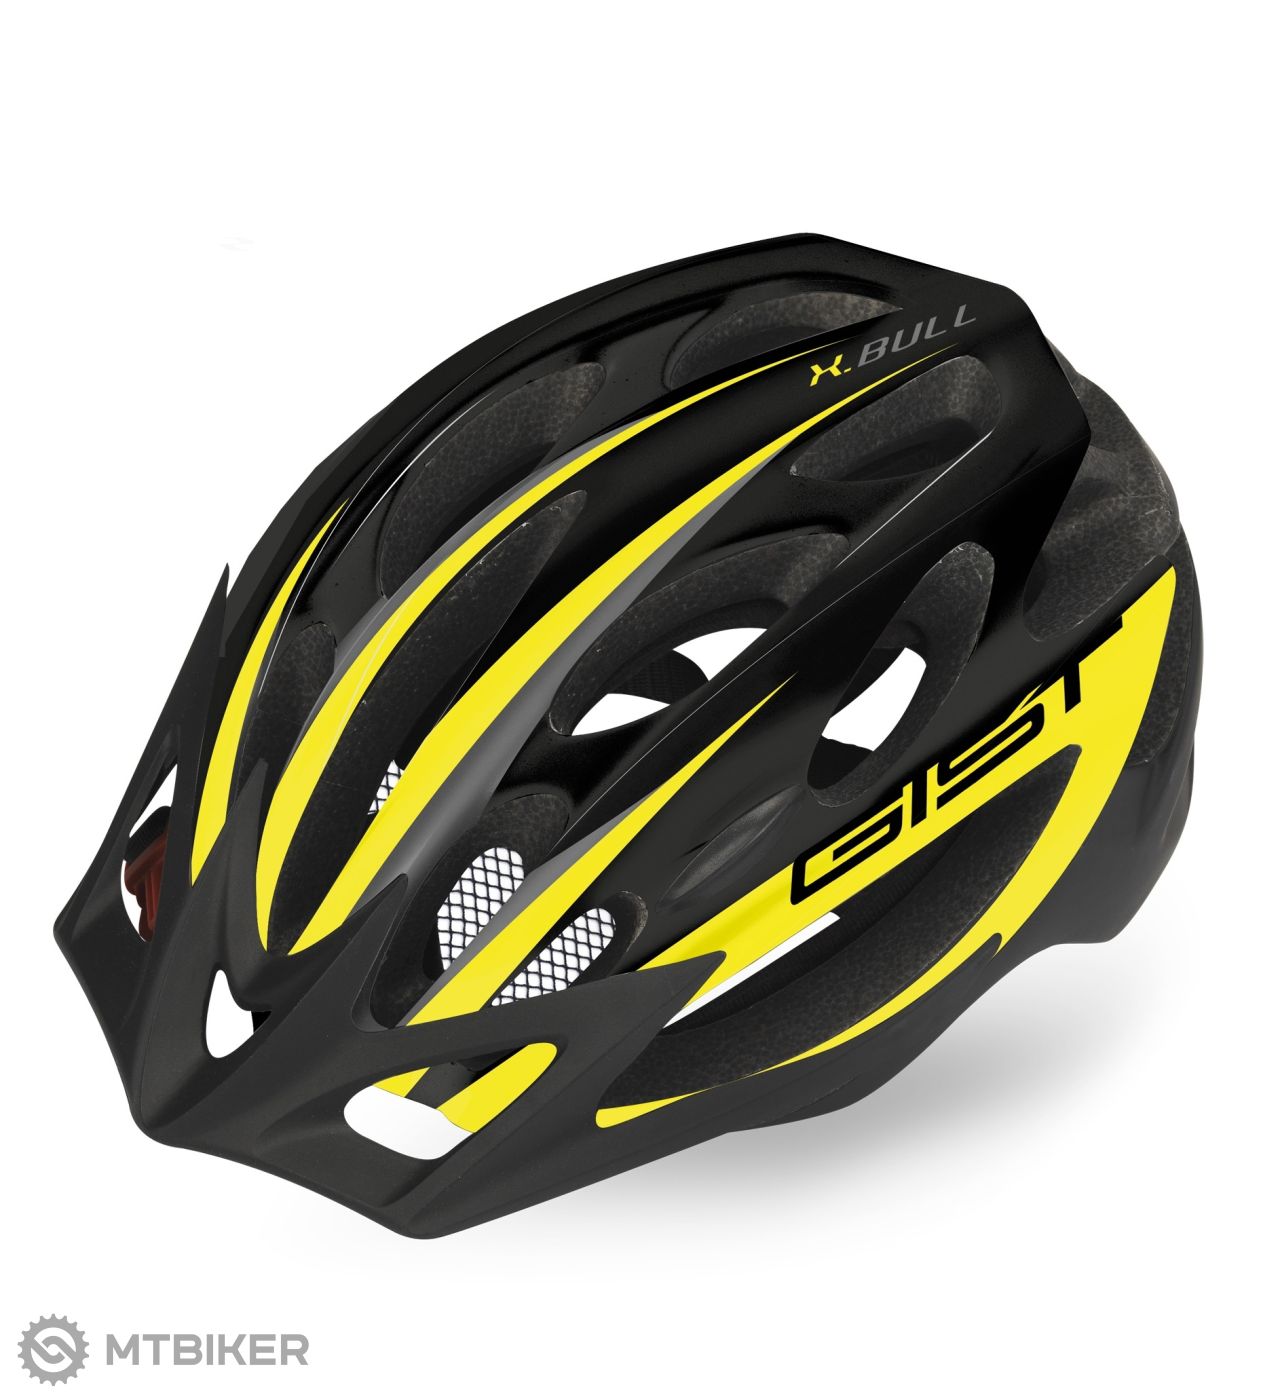 Gist X-Bull helmet, black/yellow - MTBIKER.shop